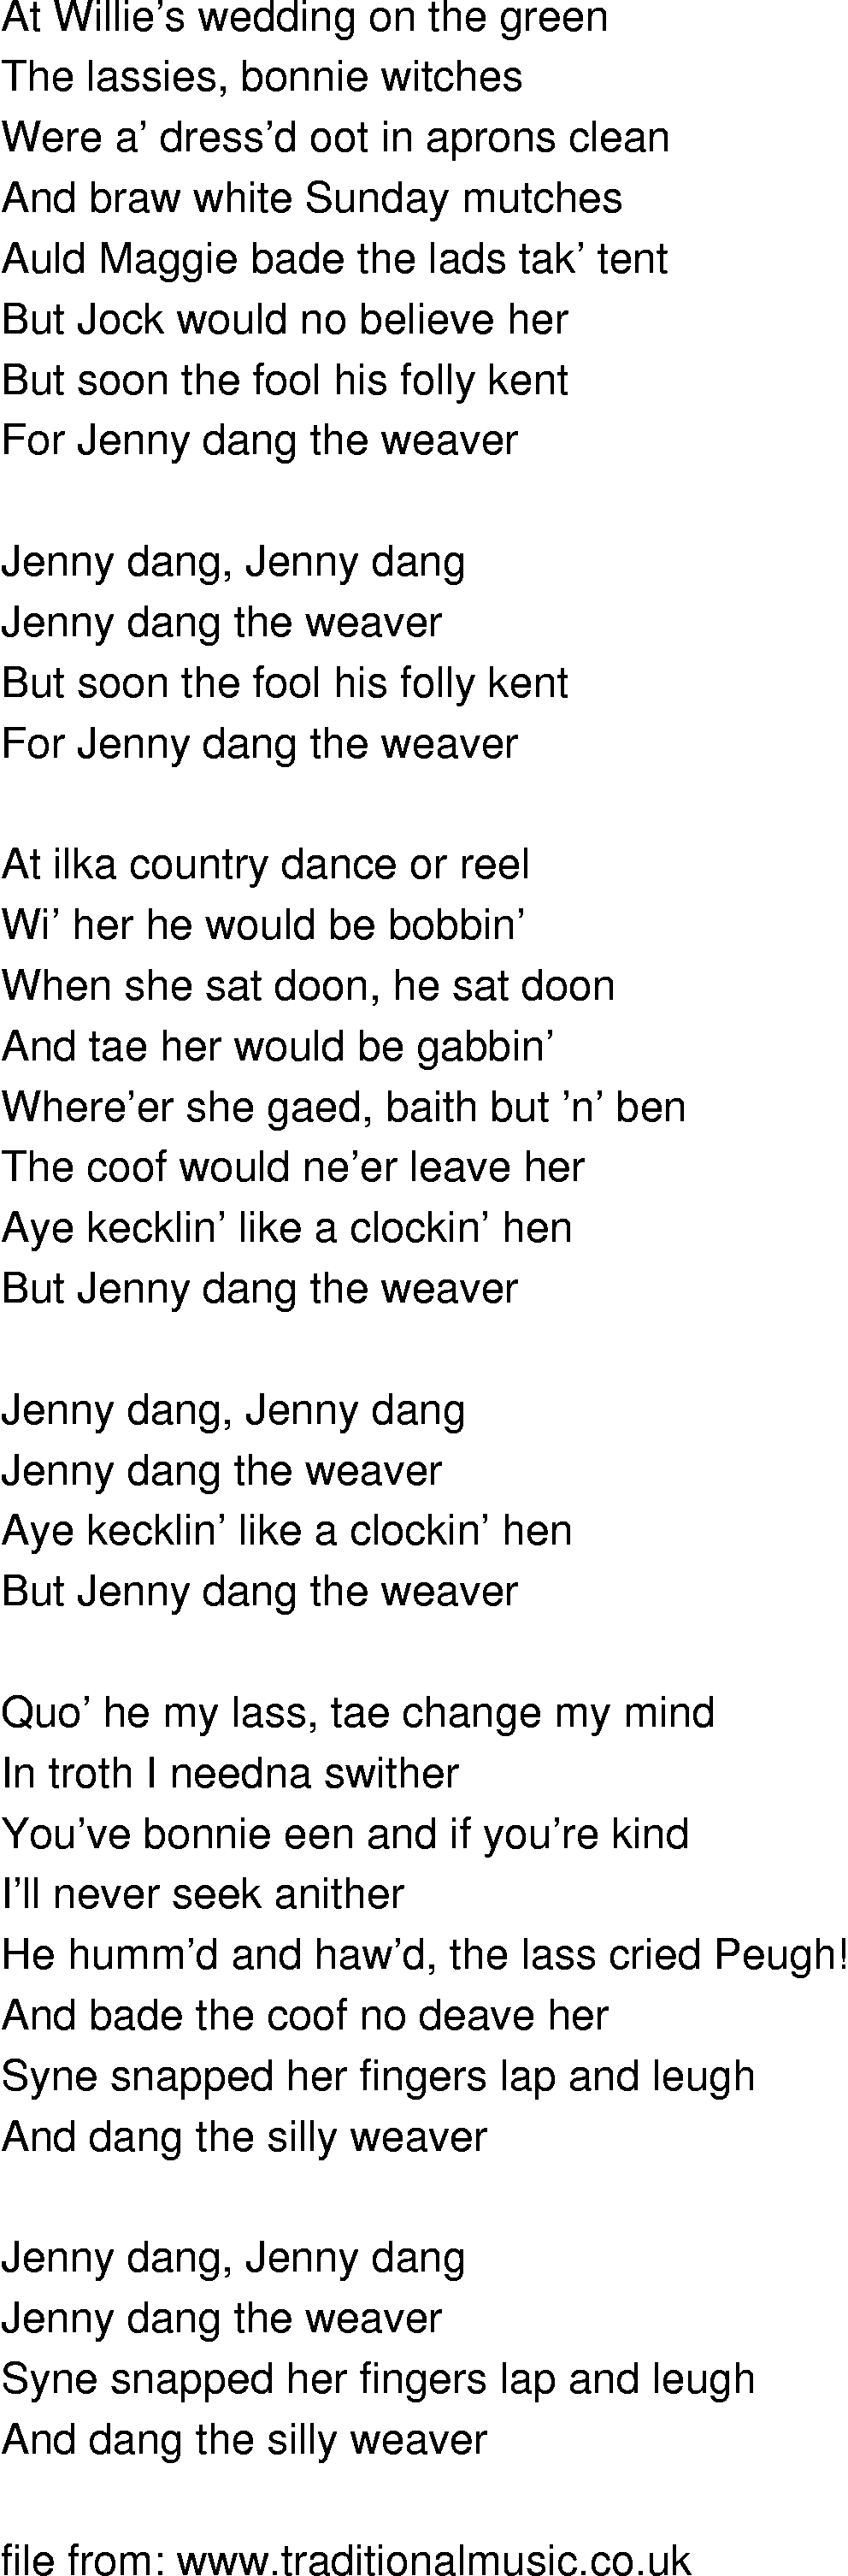 Old-Time (oldtimey) Song Lyrics - jenny dang the weaver